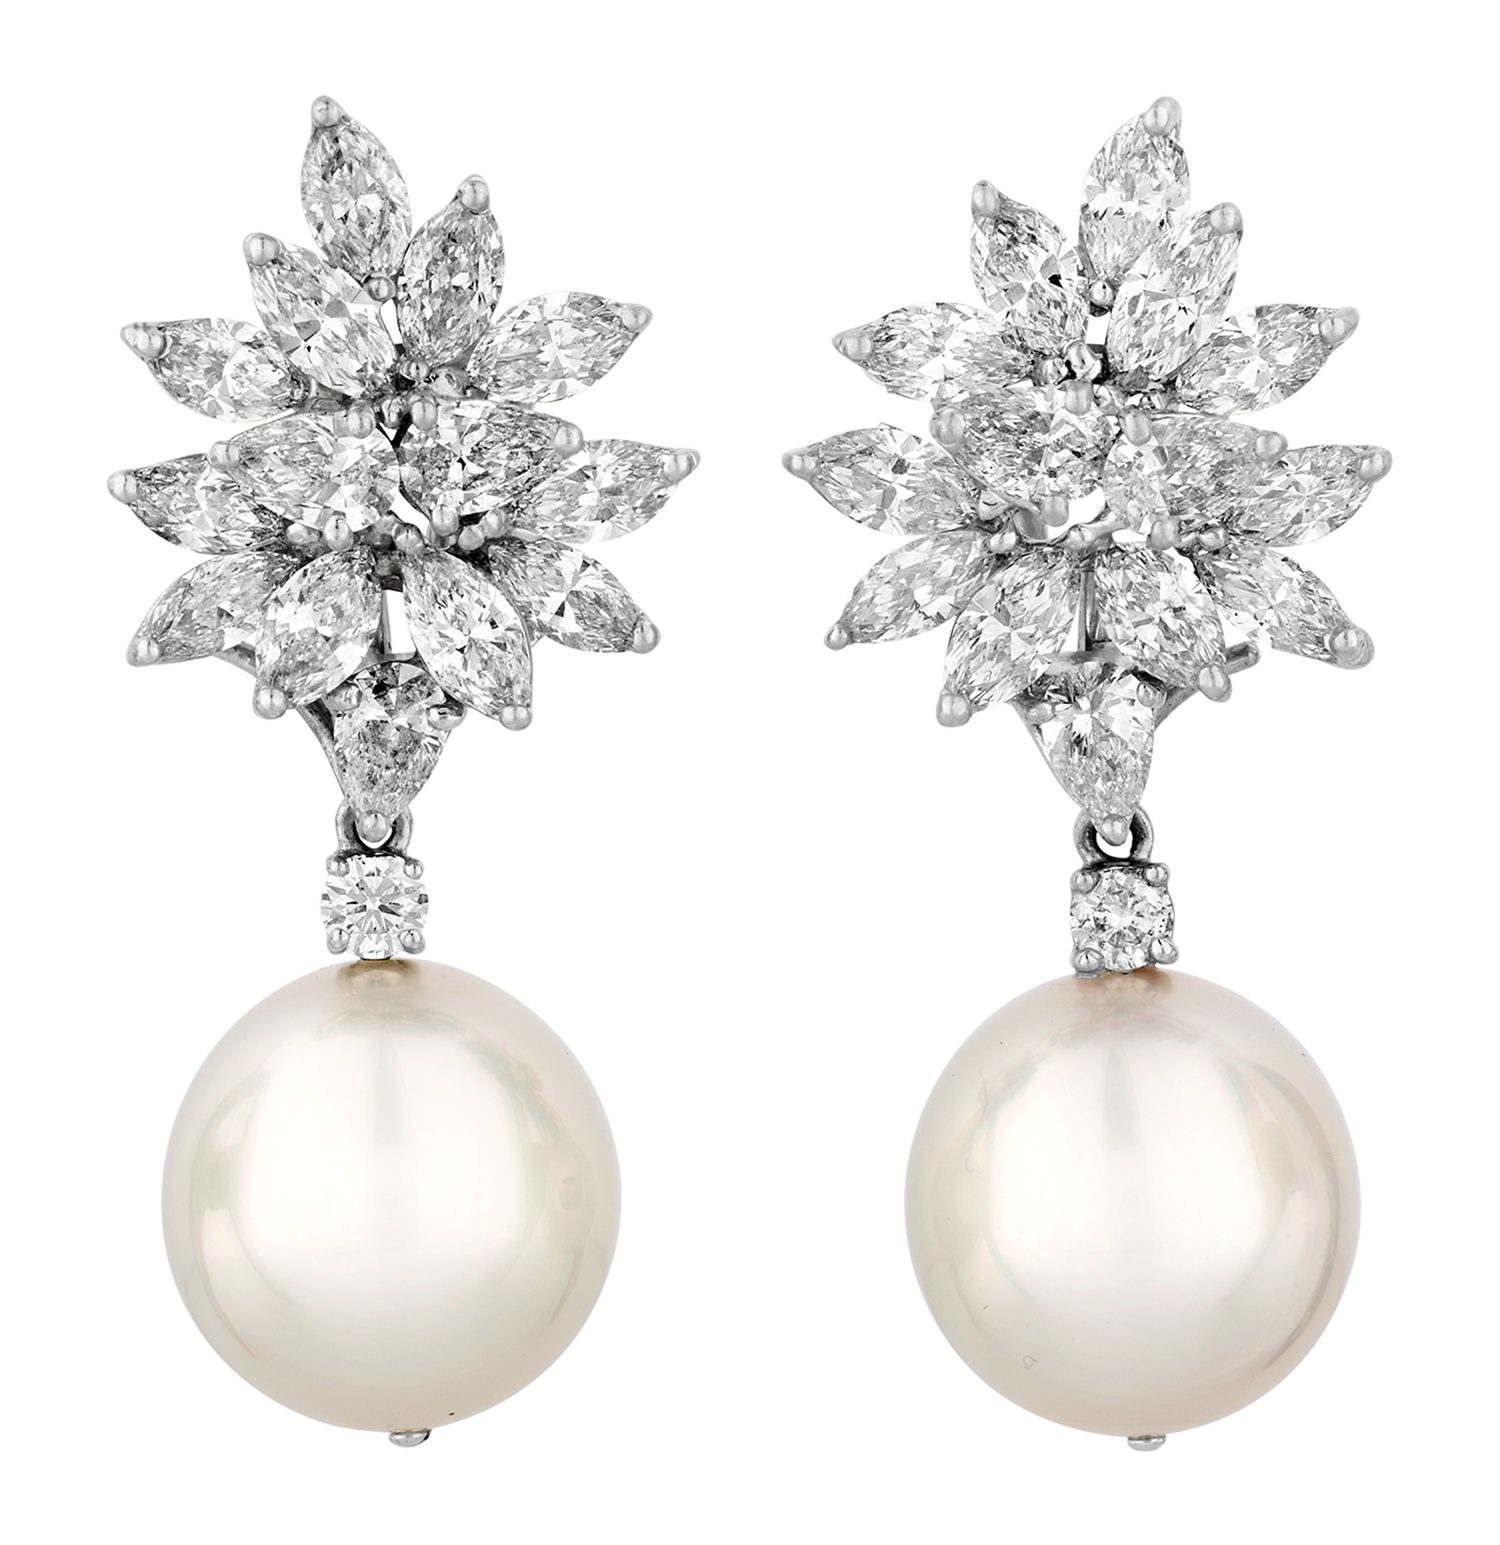 South Sea Pearl and Diamond Earrings, 15.5-16mm